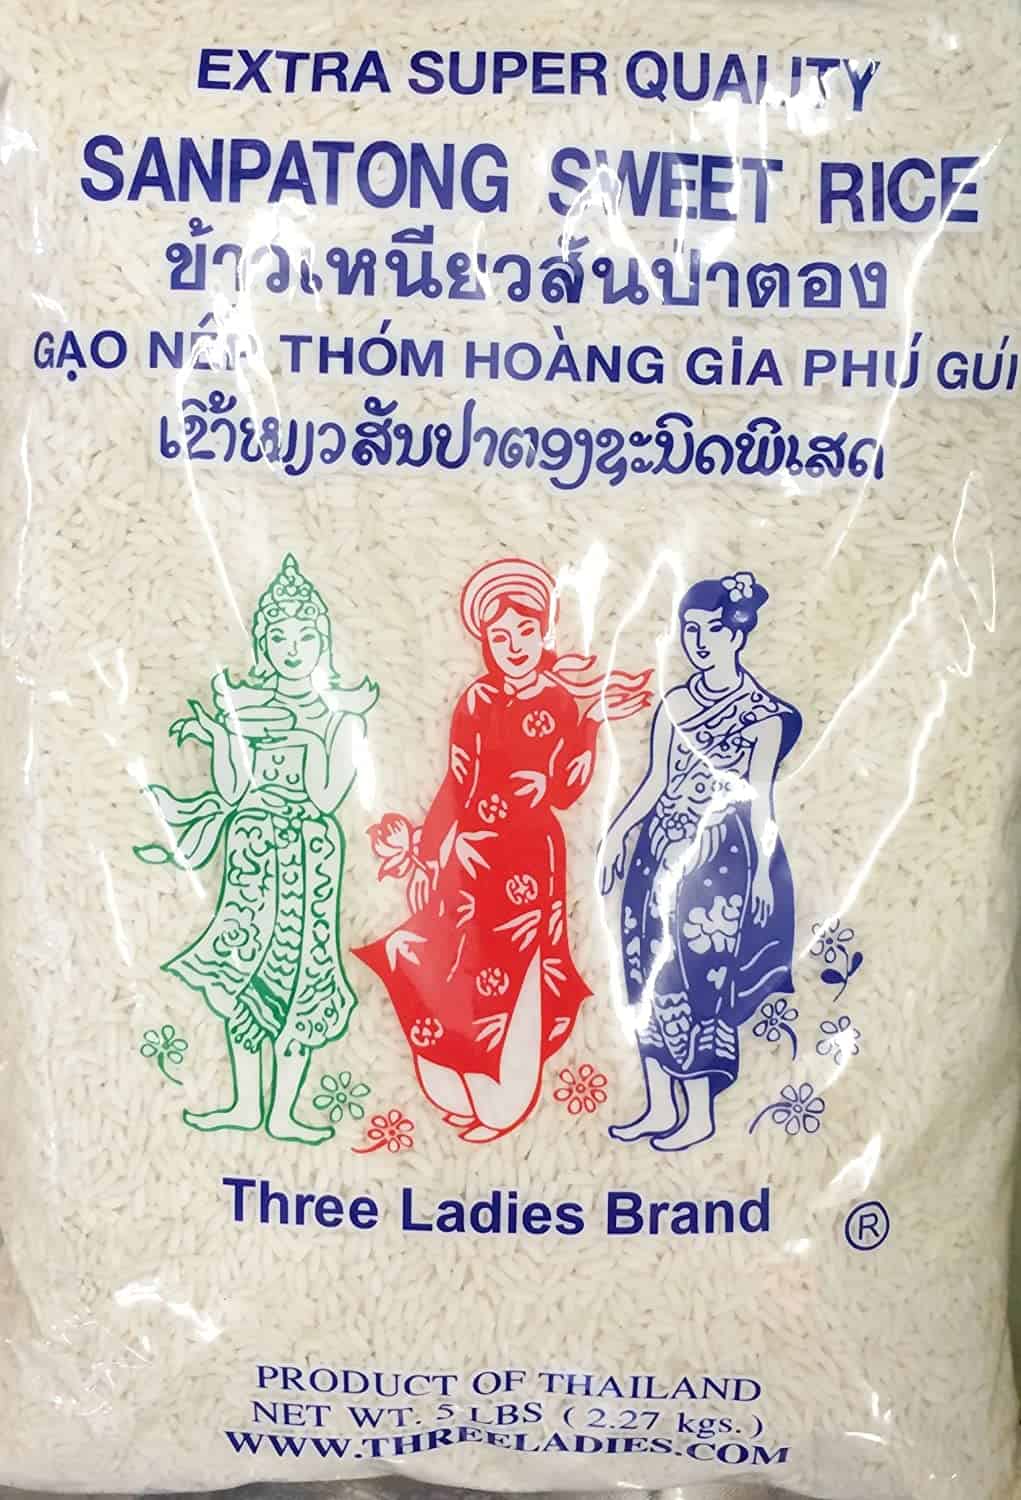 El millor arròs de gra llarg: Arròs dolç Sanpatong de la marca Three Ladies